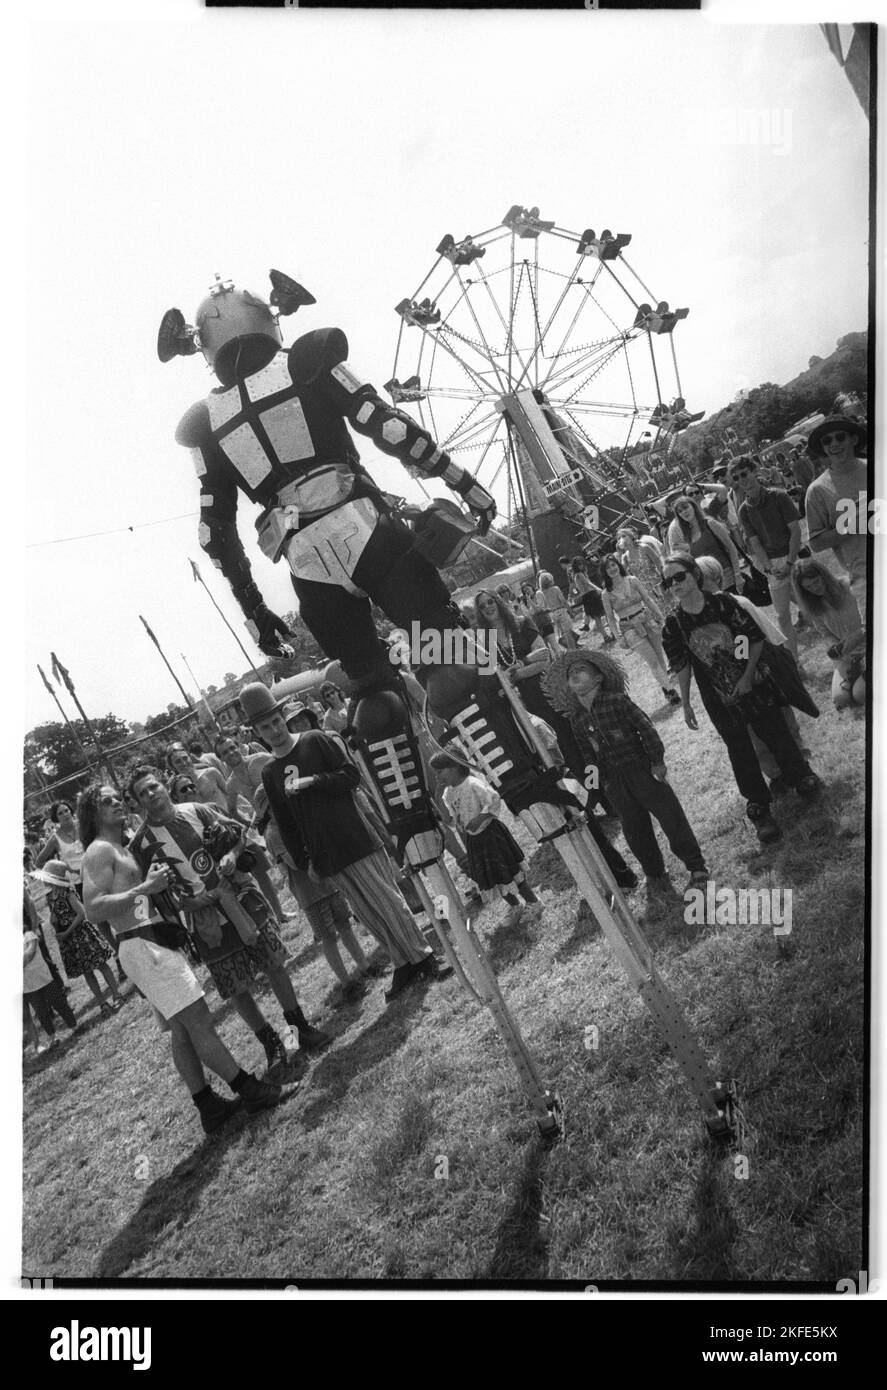 A stilt-walker at the Circus Field at Glastonbury Festival, Pilton, England, June 25-27 1993. Photograph: ROB WATKINS Stock Photo